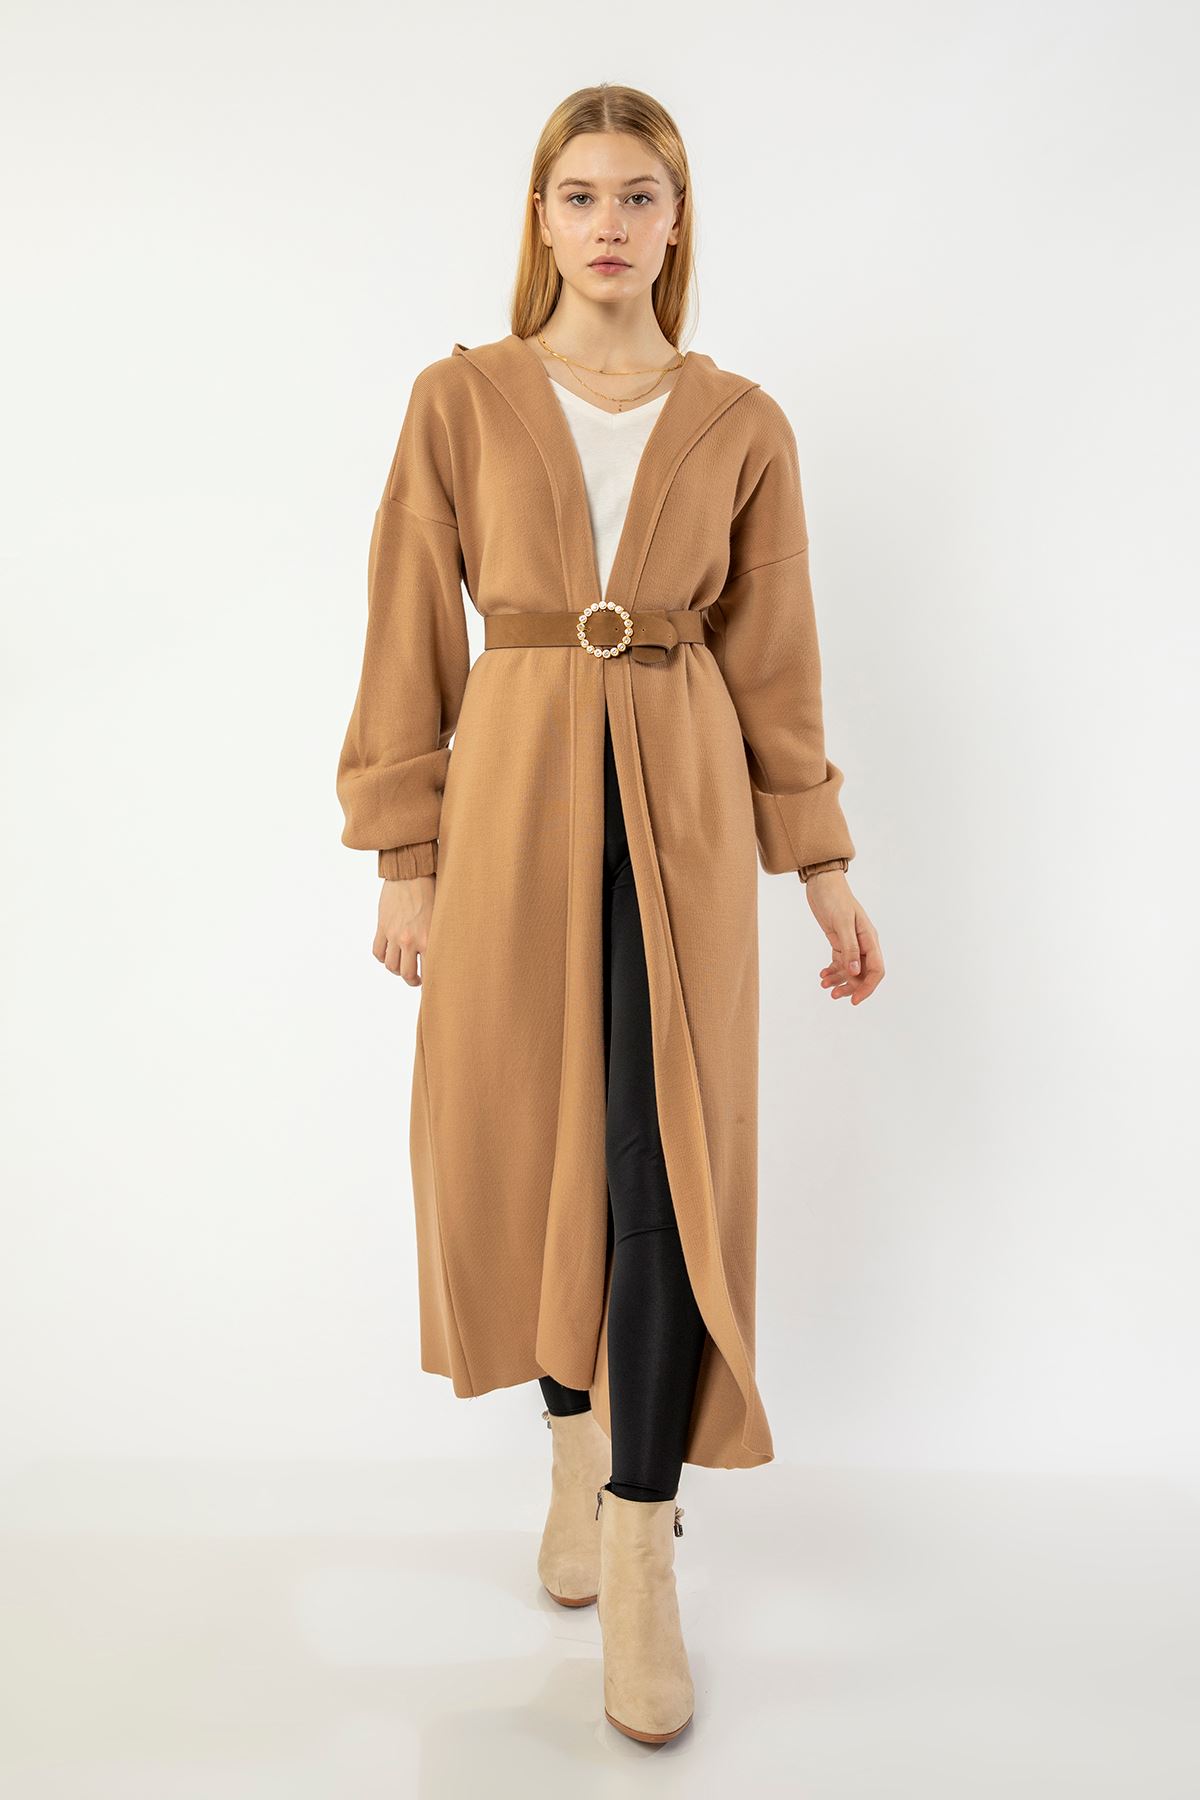 Knitwear Fabric Long Sleeve Hooded Long Oversize Women Cardigan With Belt - Light Brown